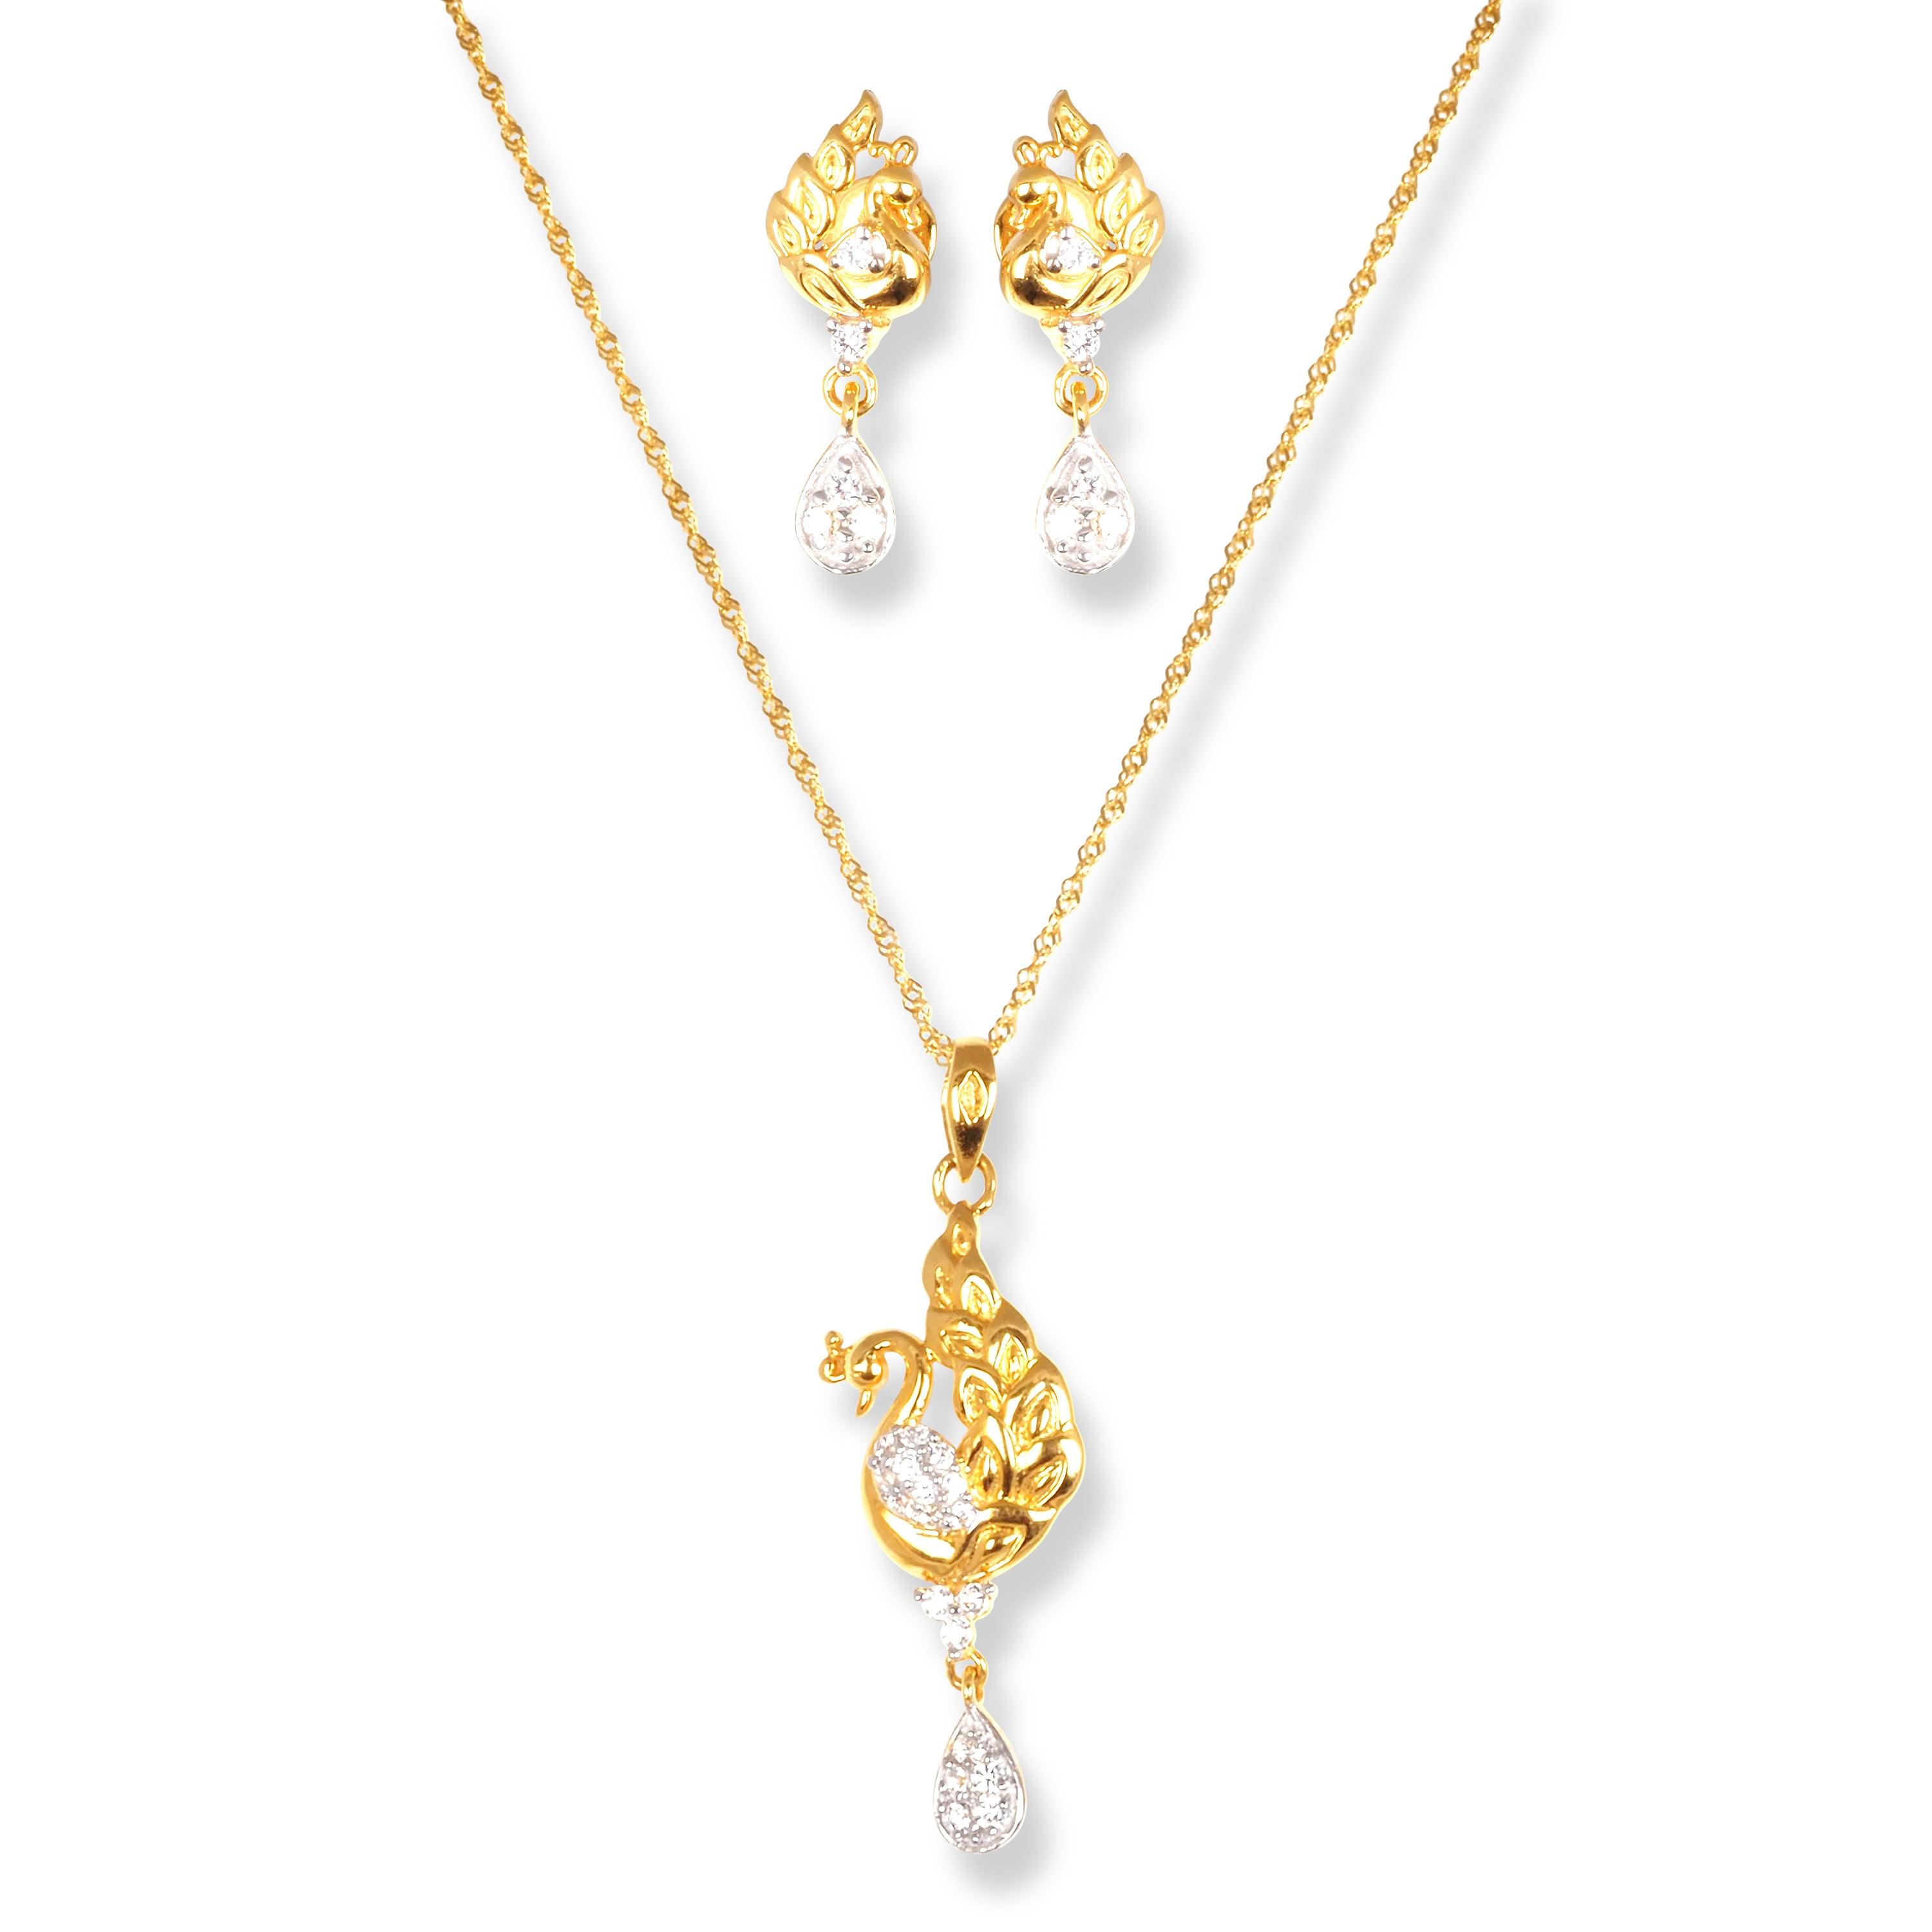 22ct Gold Peacock Set With Swarovski Zirconia Stones (Pendant + Chain + Drop Earrings) - Minar Jewellers